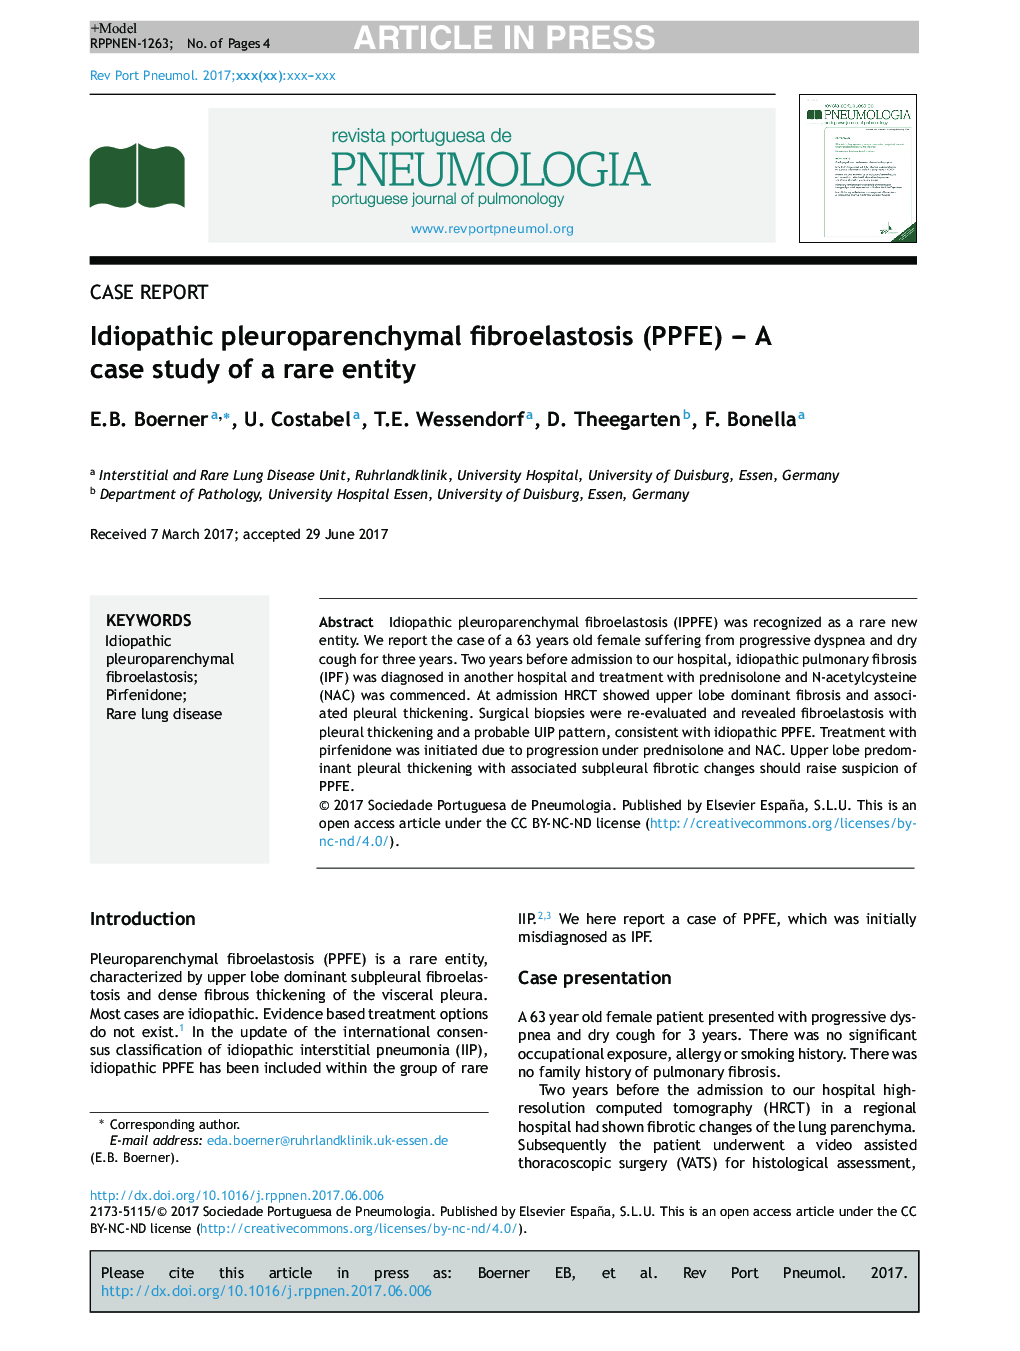 Idiopathic pleuroparenchymal fibroelastosis (PPFE) - A case study of a rare entity